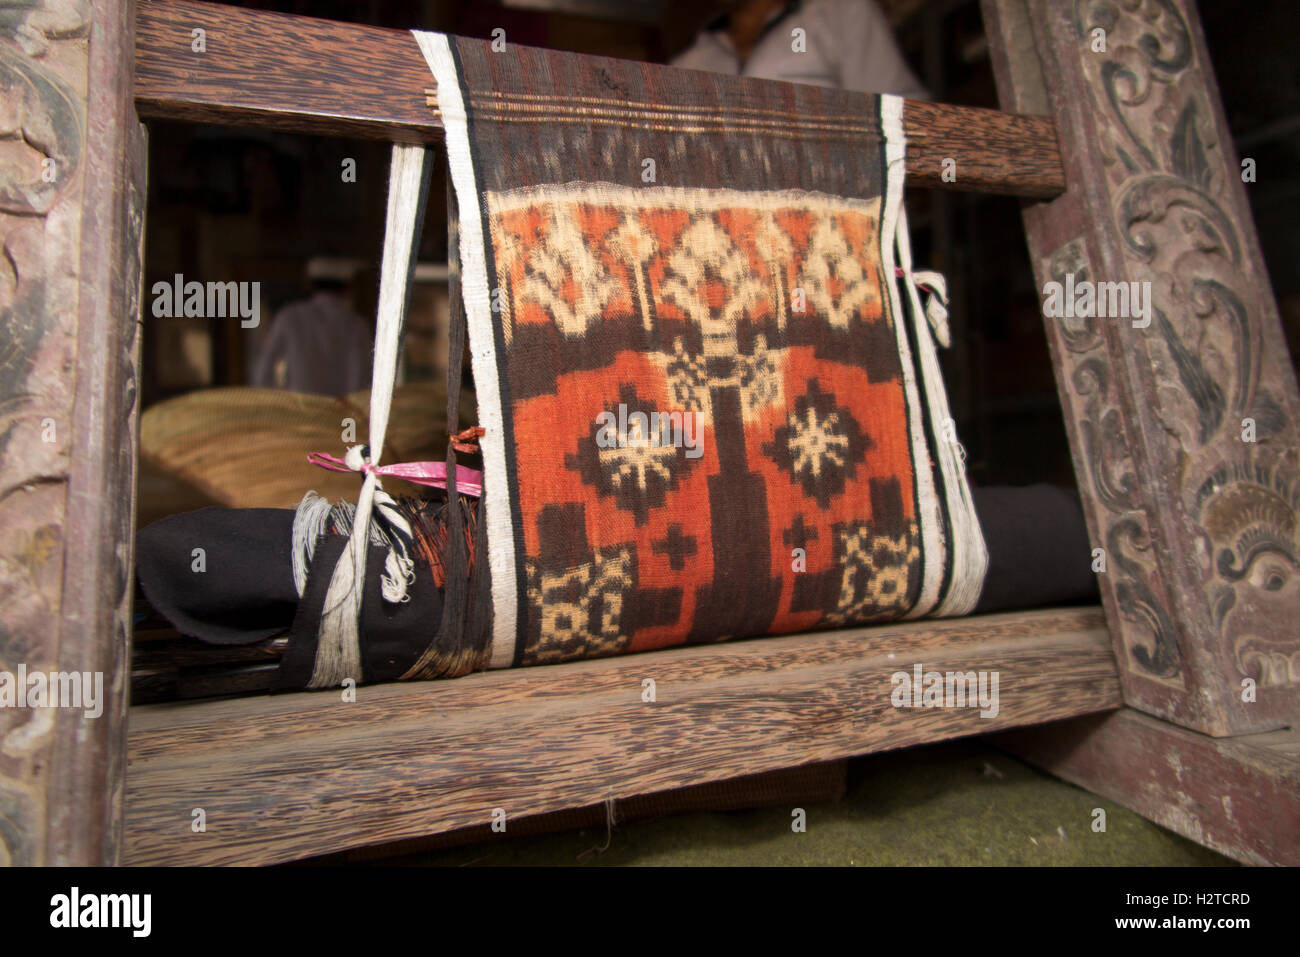 Indonesia, Bali, Tengannan, double ikat fabric being woven on backstrap loom Stock Photo